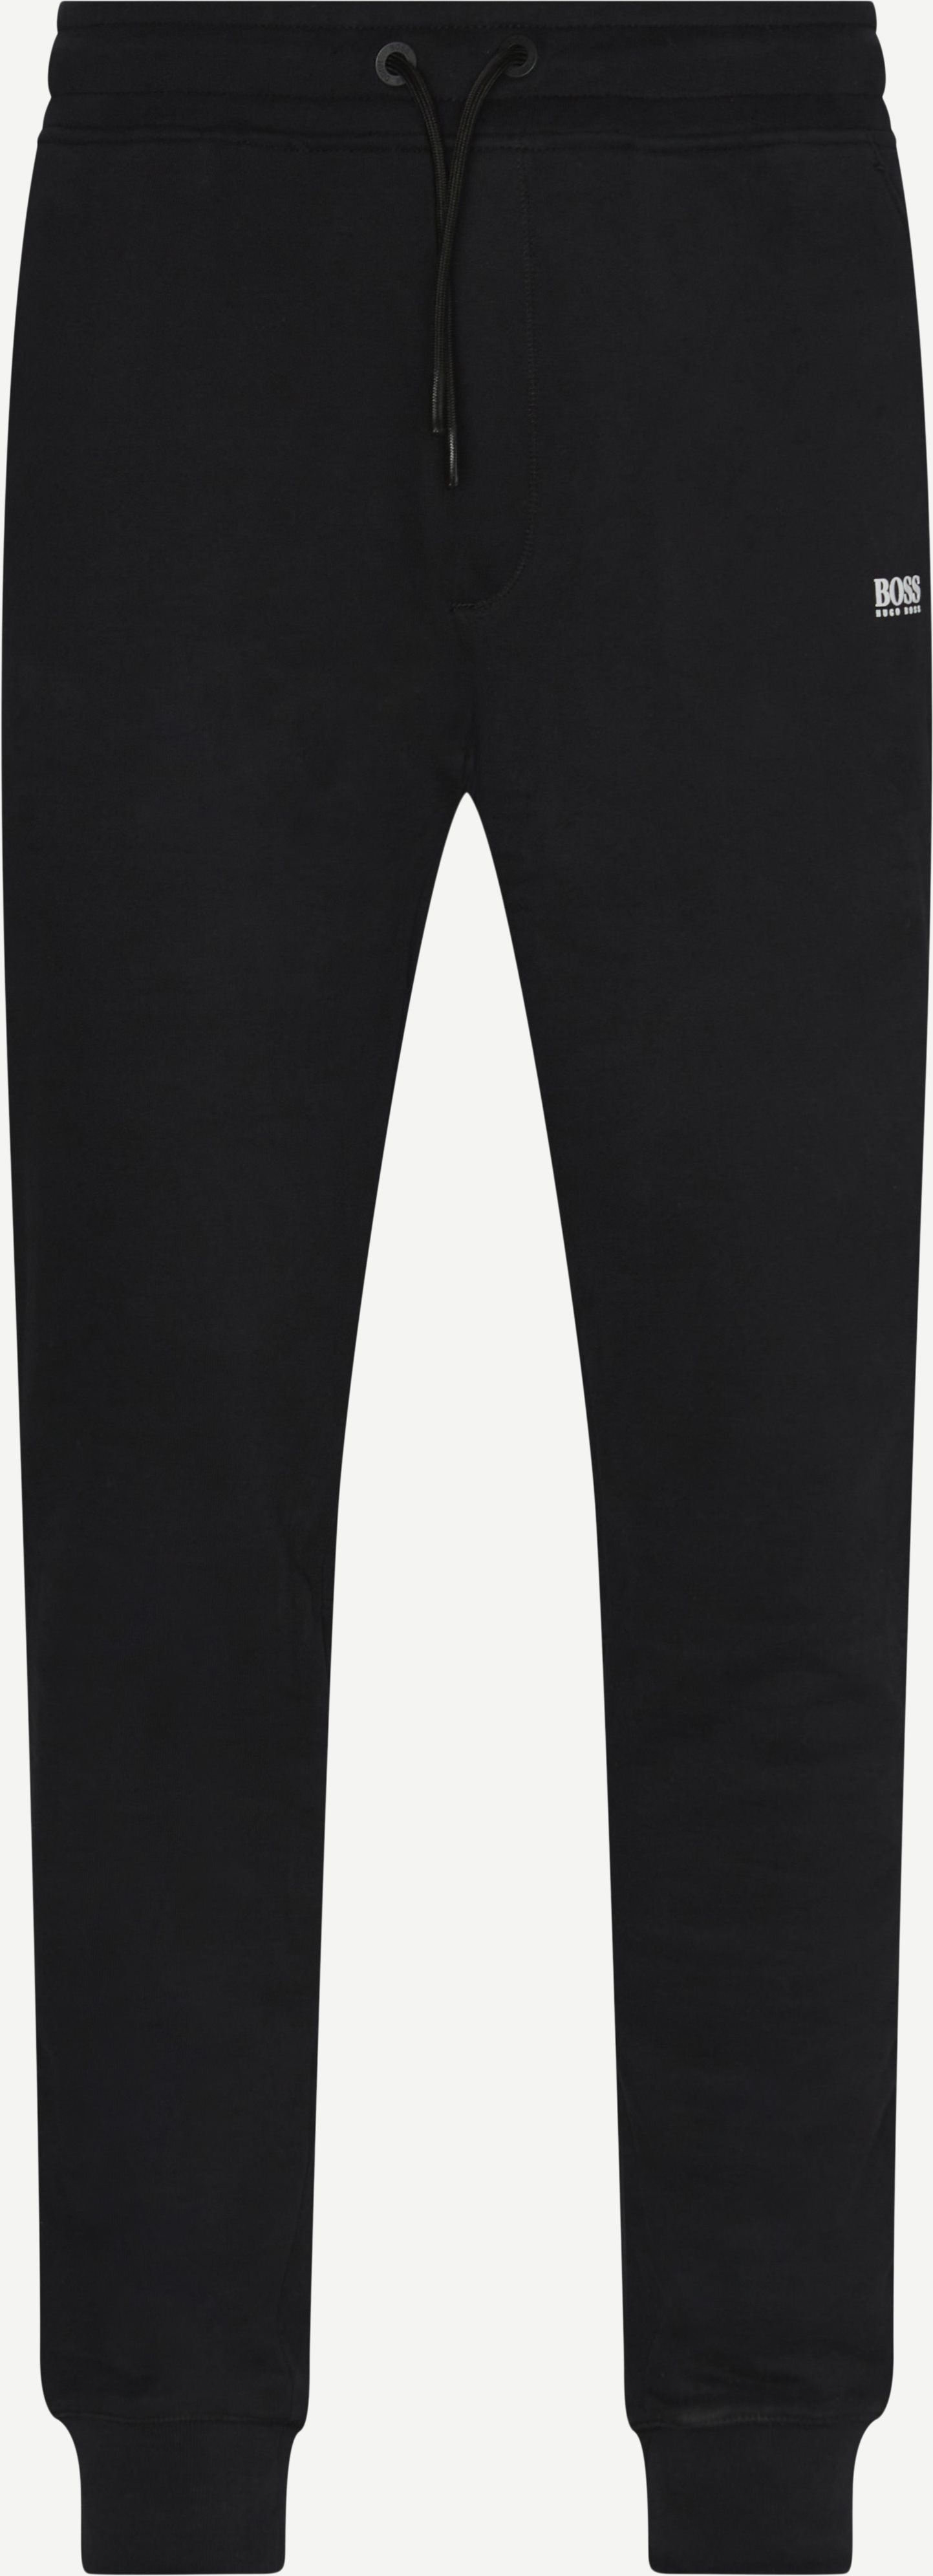 Skeevo Sweatpants - Trousers - Regular fit - Black